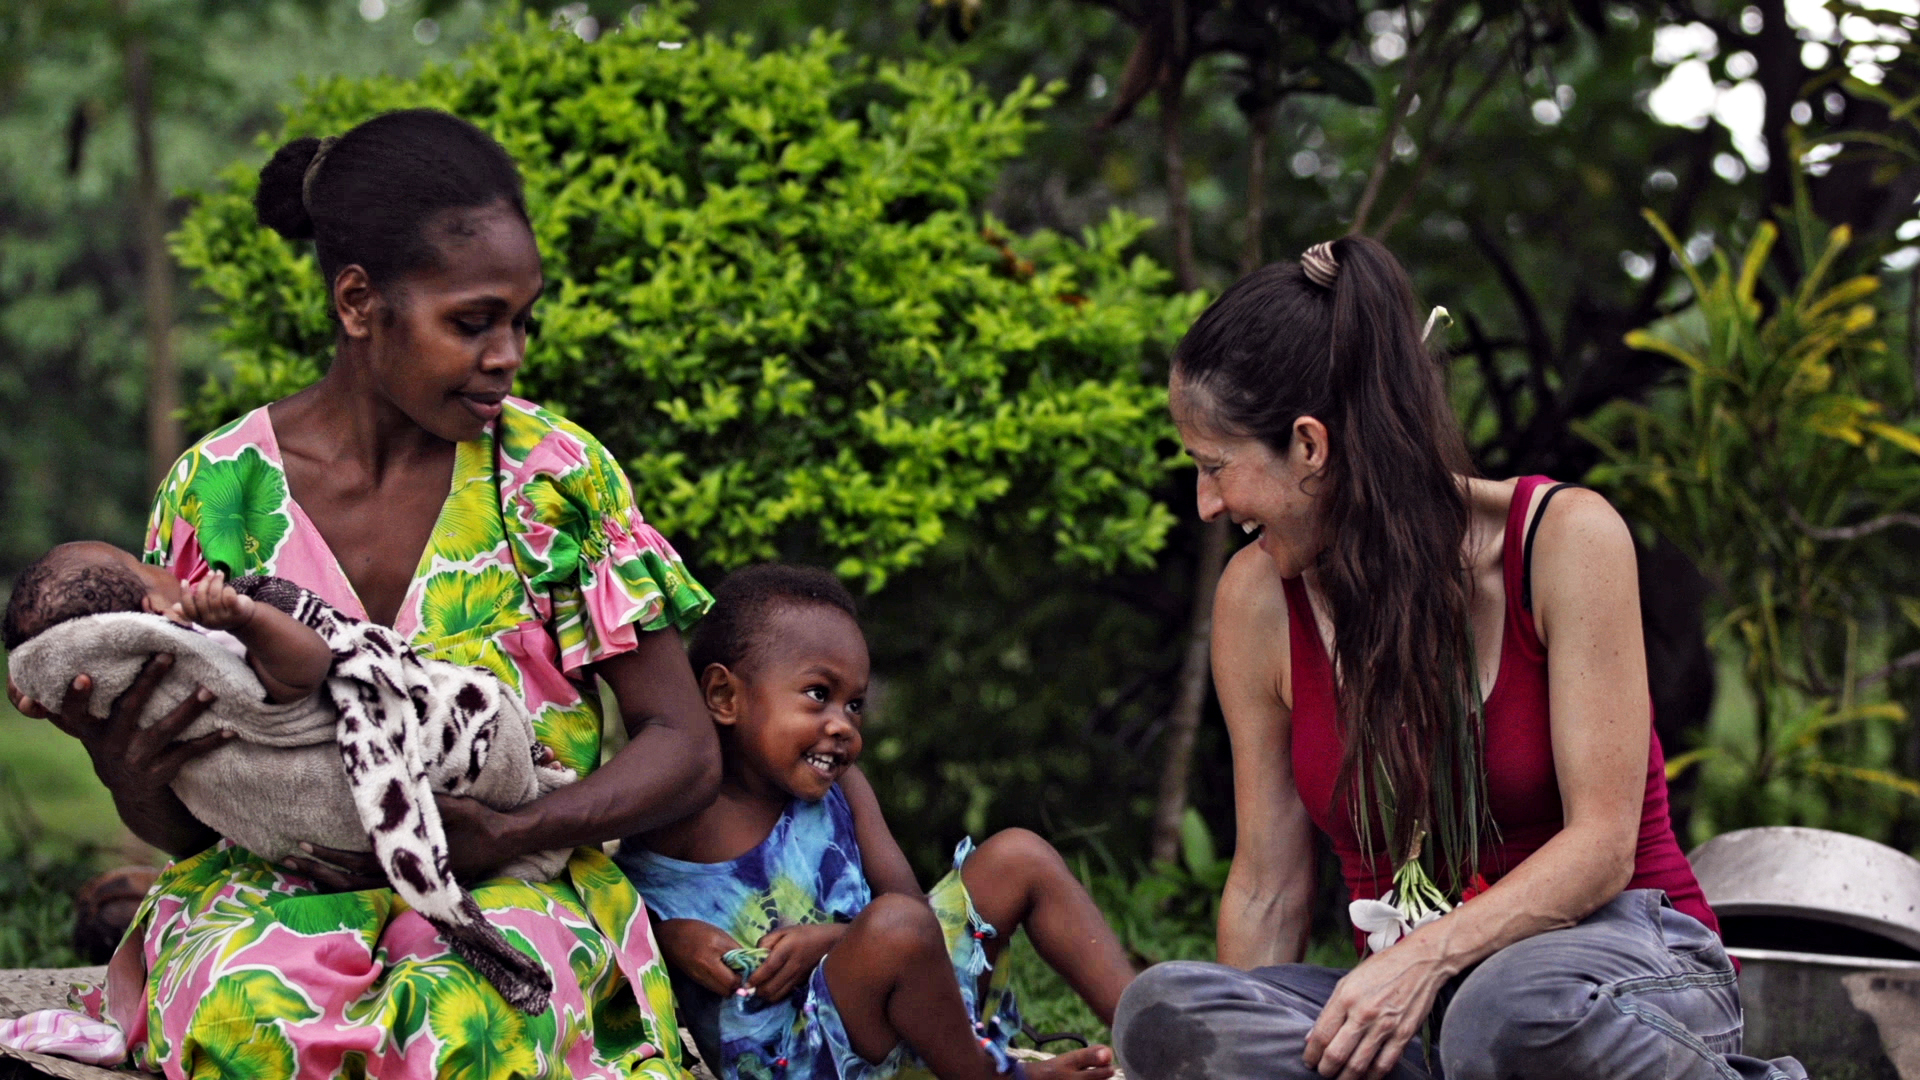 Travelling Photographers - E7 - Vanuatu - The Little Girl from Ambrym